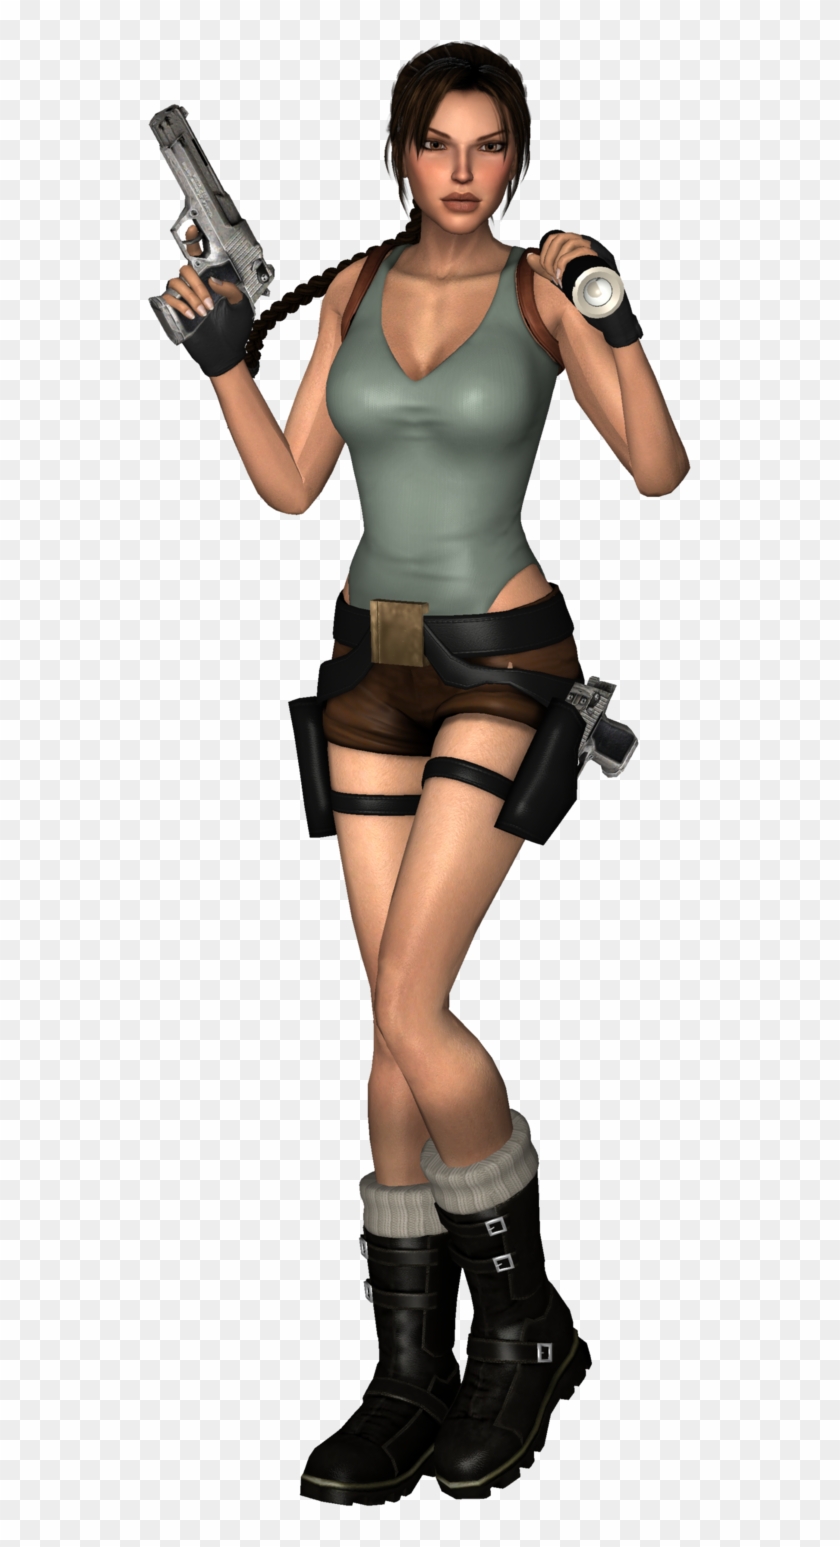 Best Free Lara Croft Transparent Png Image - Stocking Clipart #679379